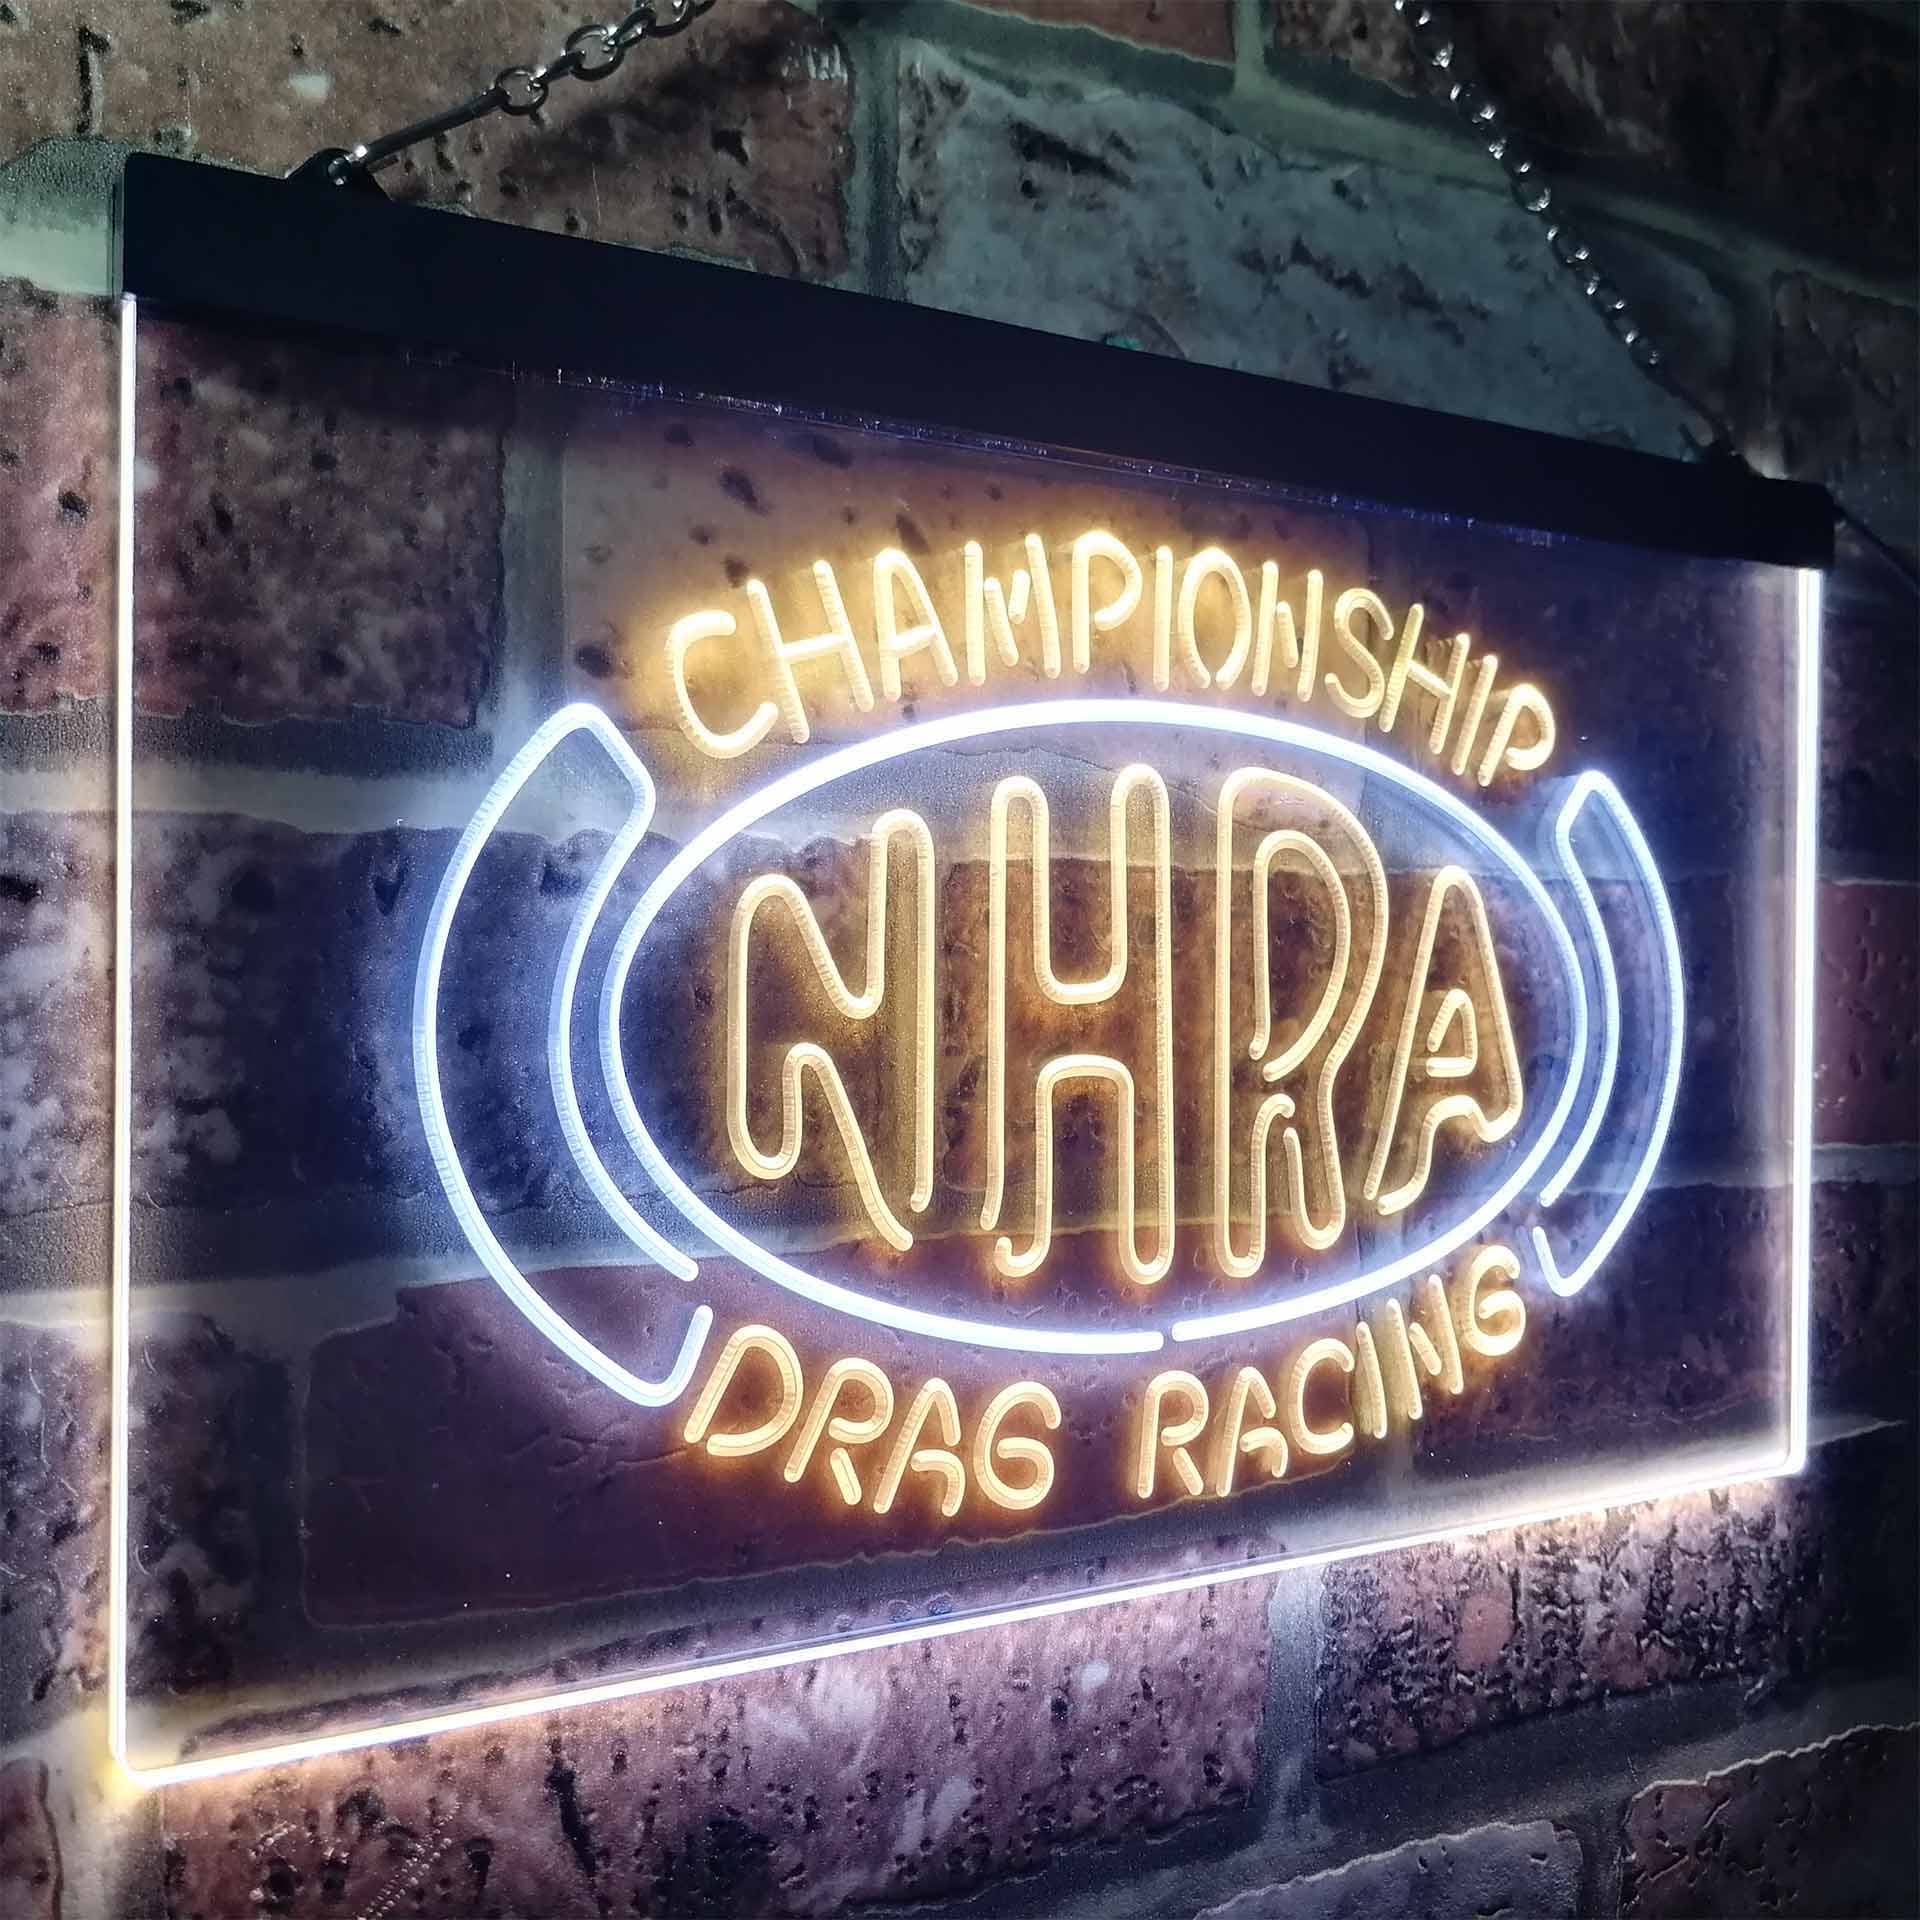 NHRA Sports Team Drag Racings LED Neon Sign